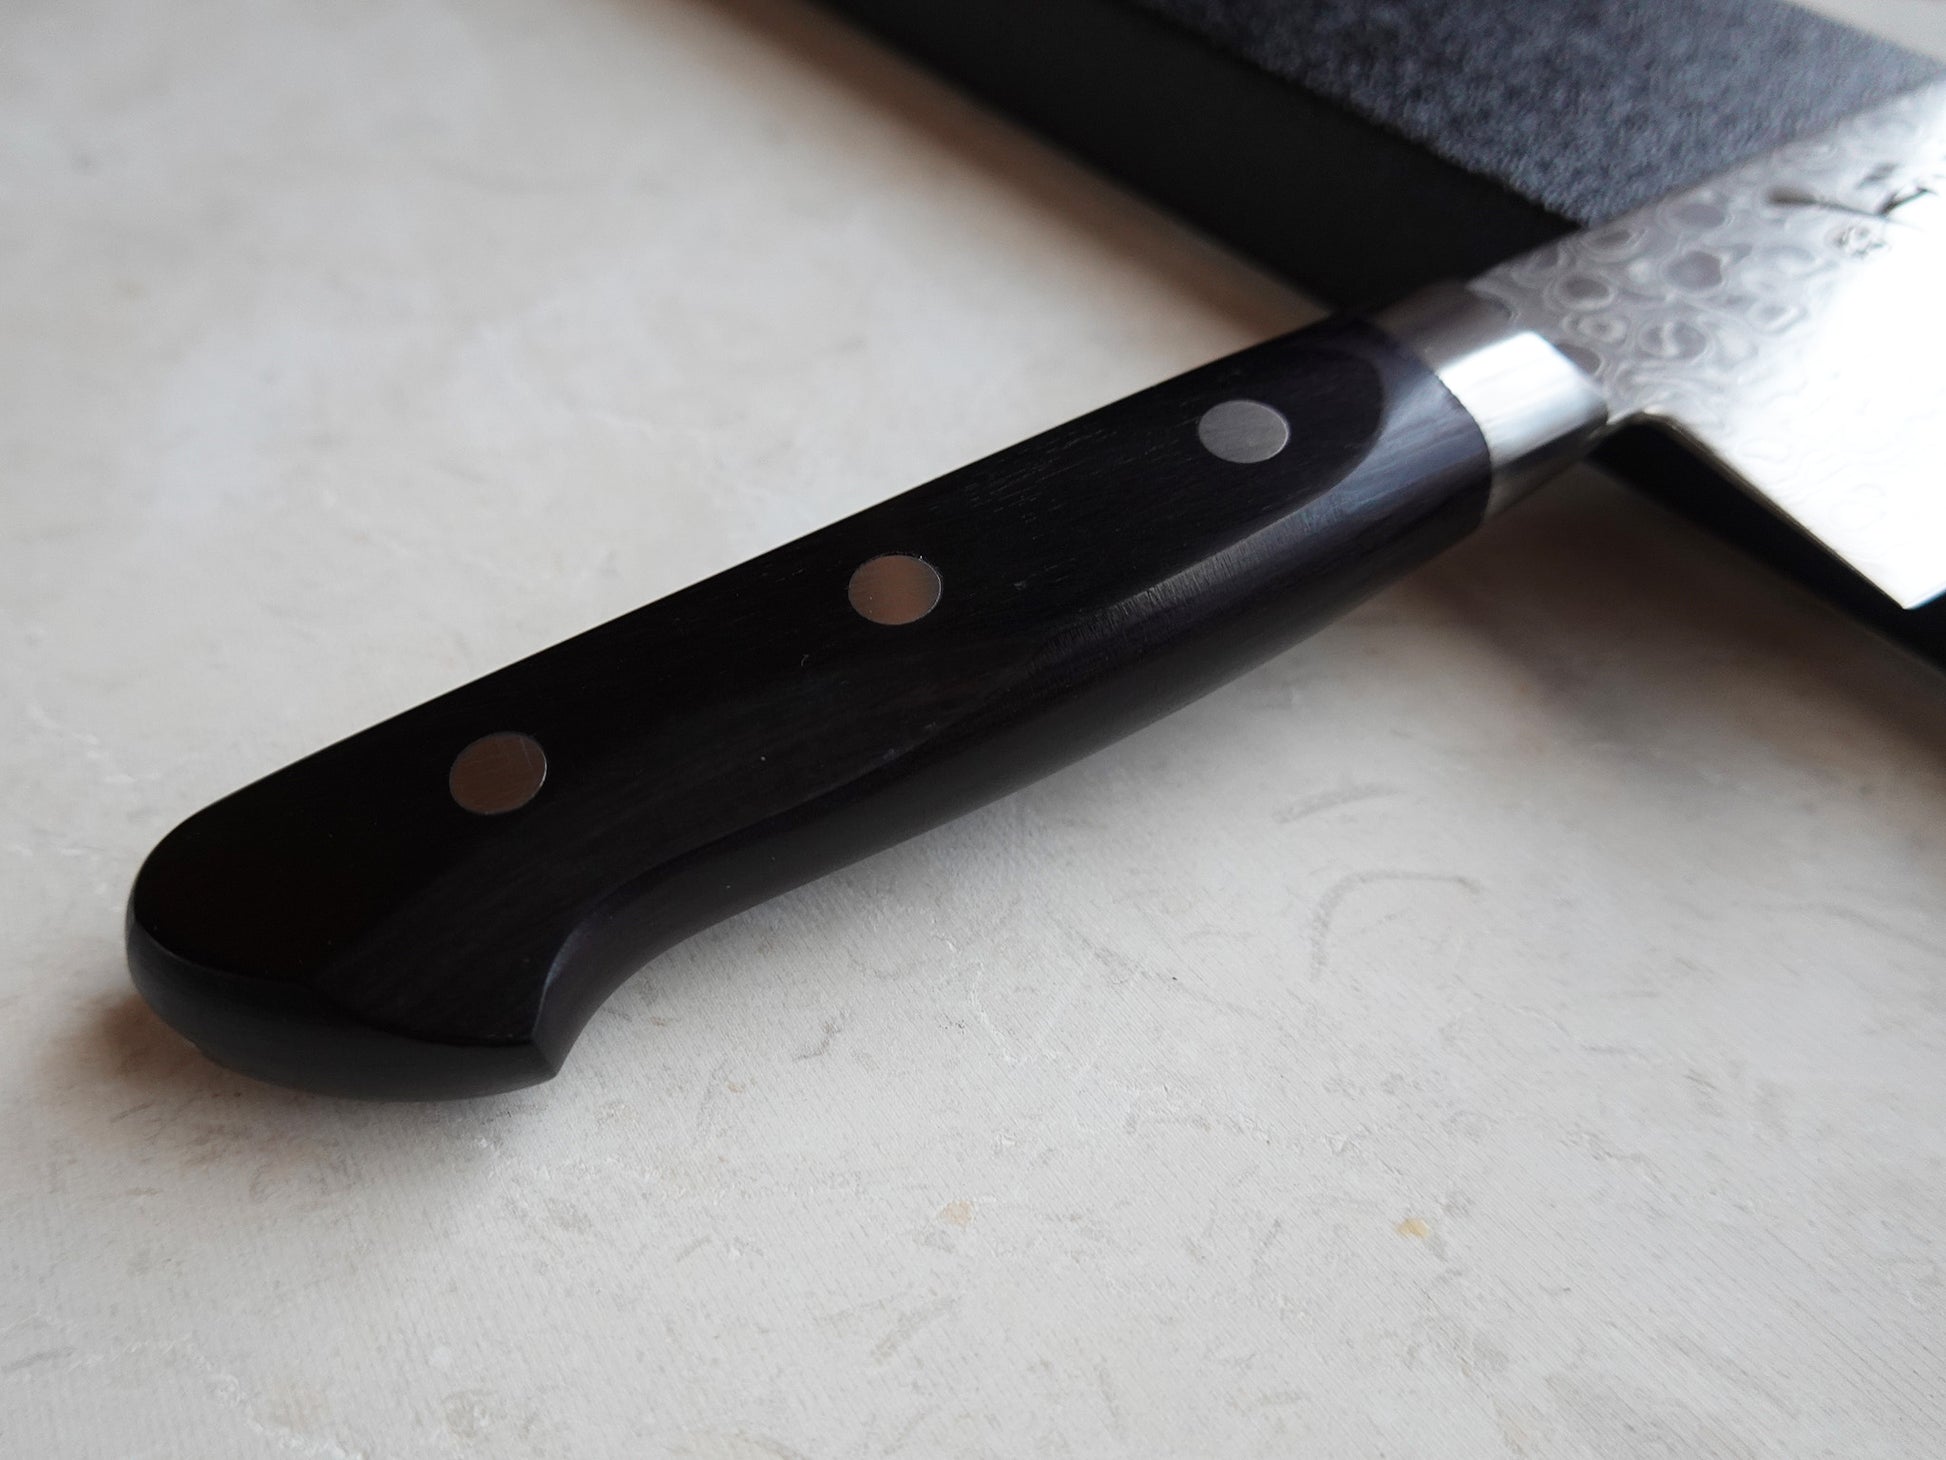 Cuchillo japonés Santoku de Damasco, acero inoxidable ZA18 de alta calidad,  69 capas, 7 pulgadas, multiusos, hecho a mano en Sakai, Japón